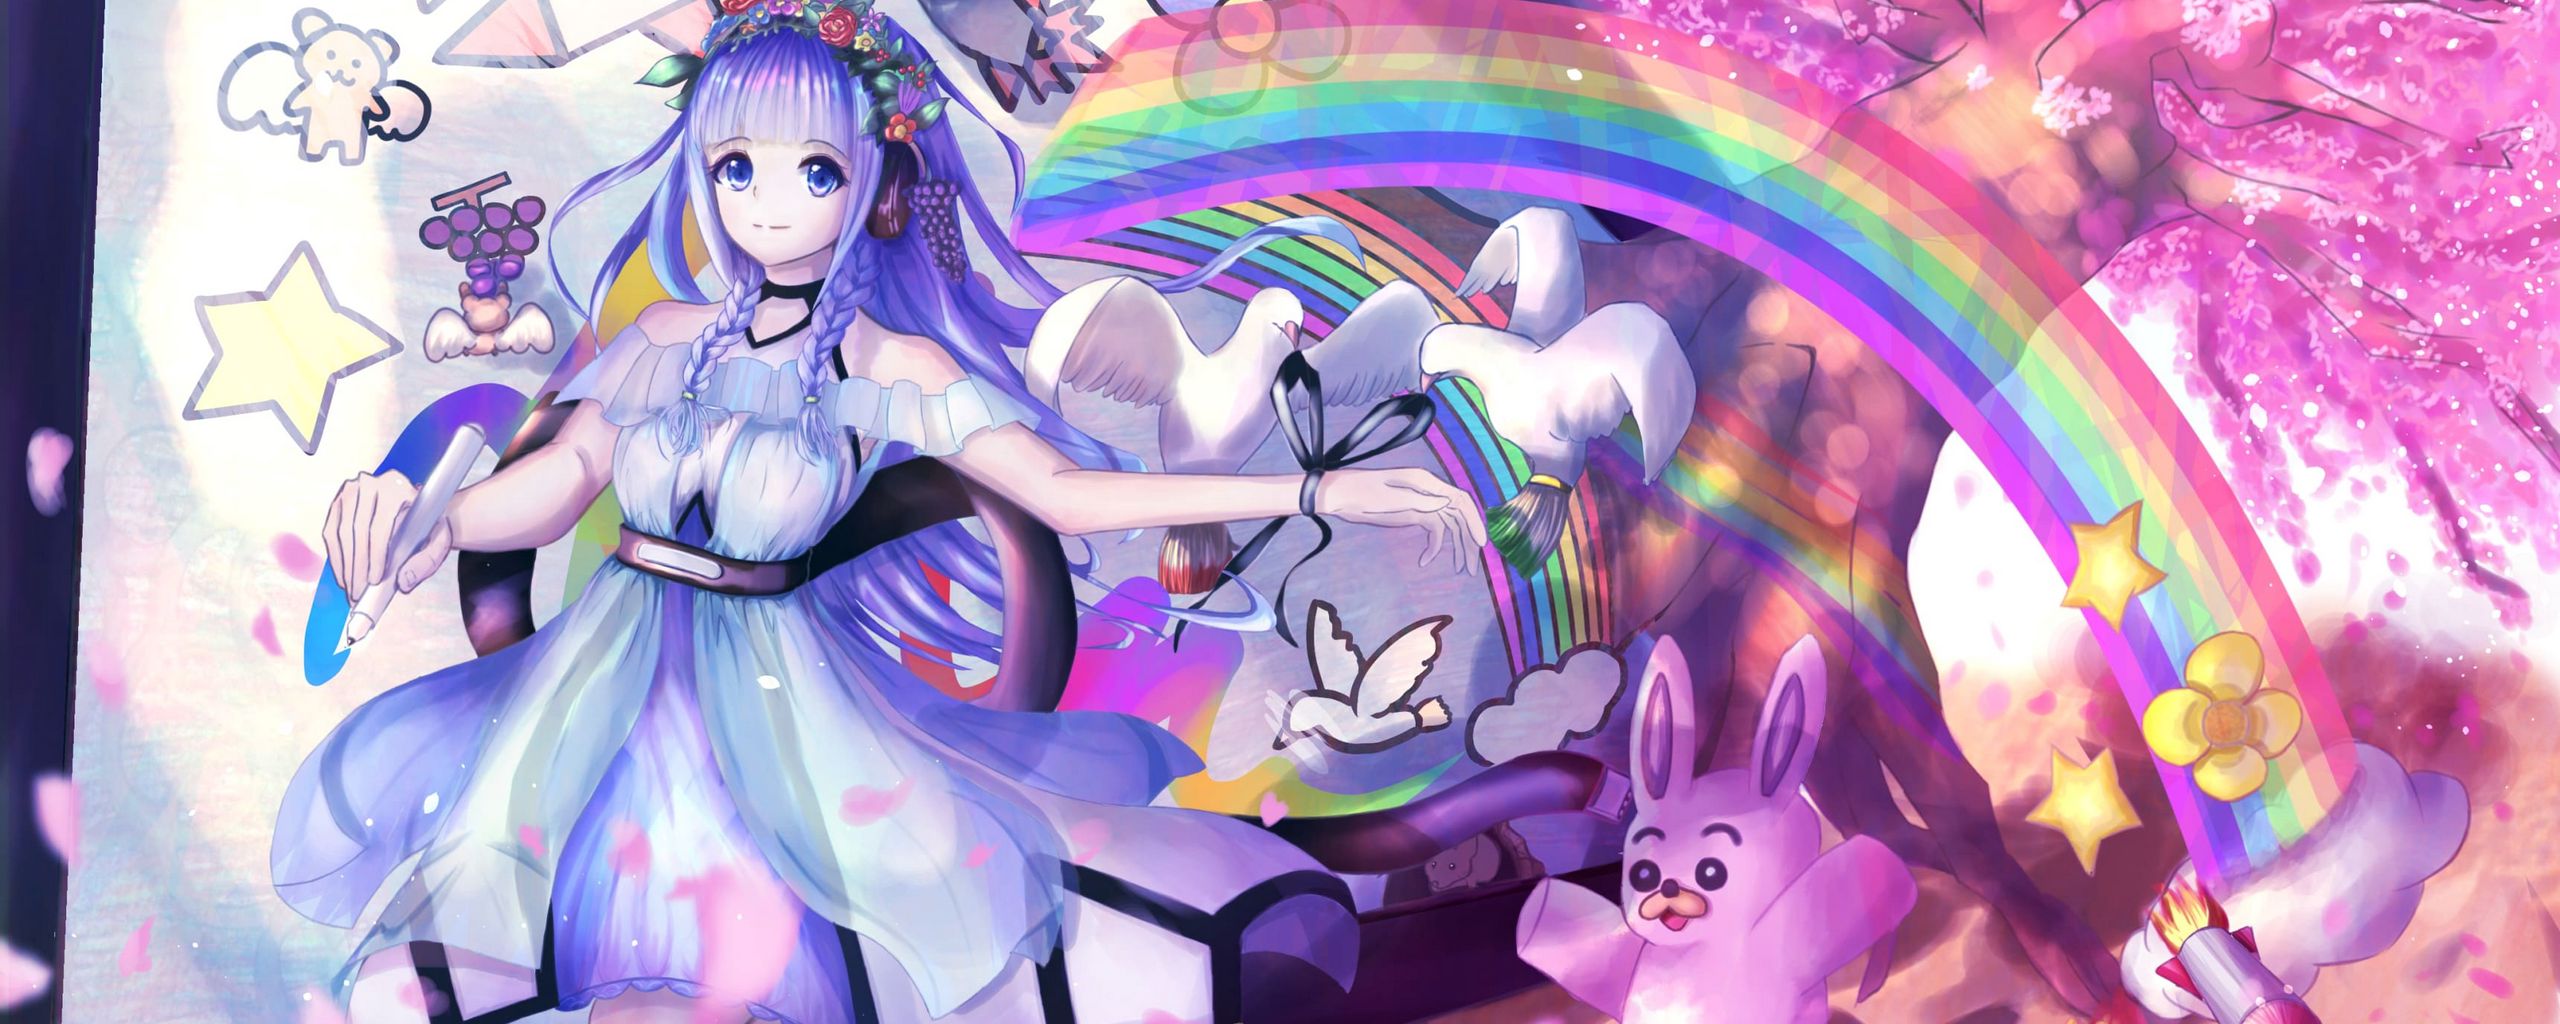 Download wallpaper 2560x1024 girl, rainbow, imagination, anime, art  ultrawide monitor hd background